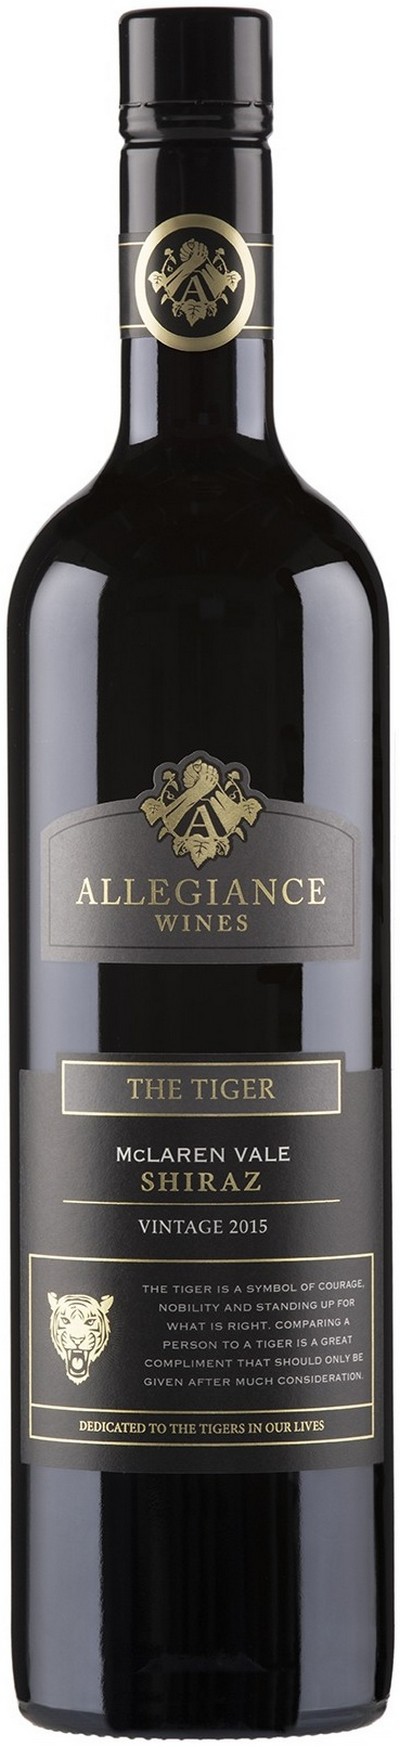 allegiance-wines-the-tiger-mclaren-vale-shiraz-2015